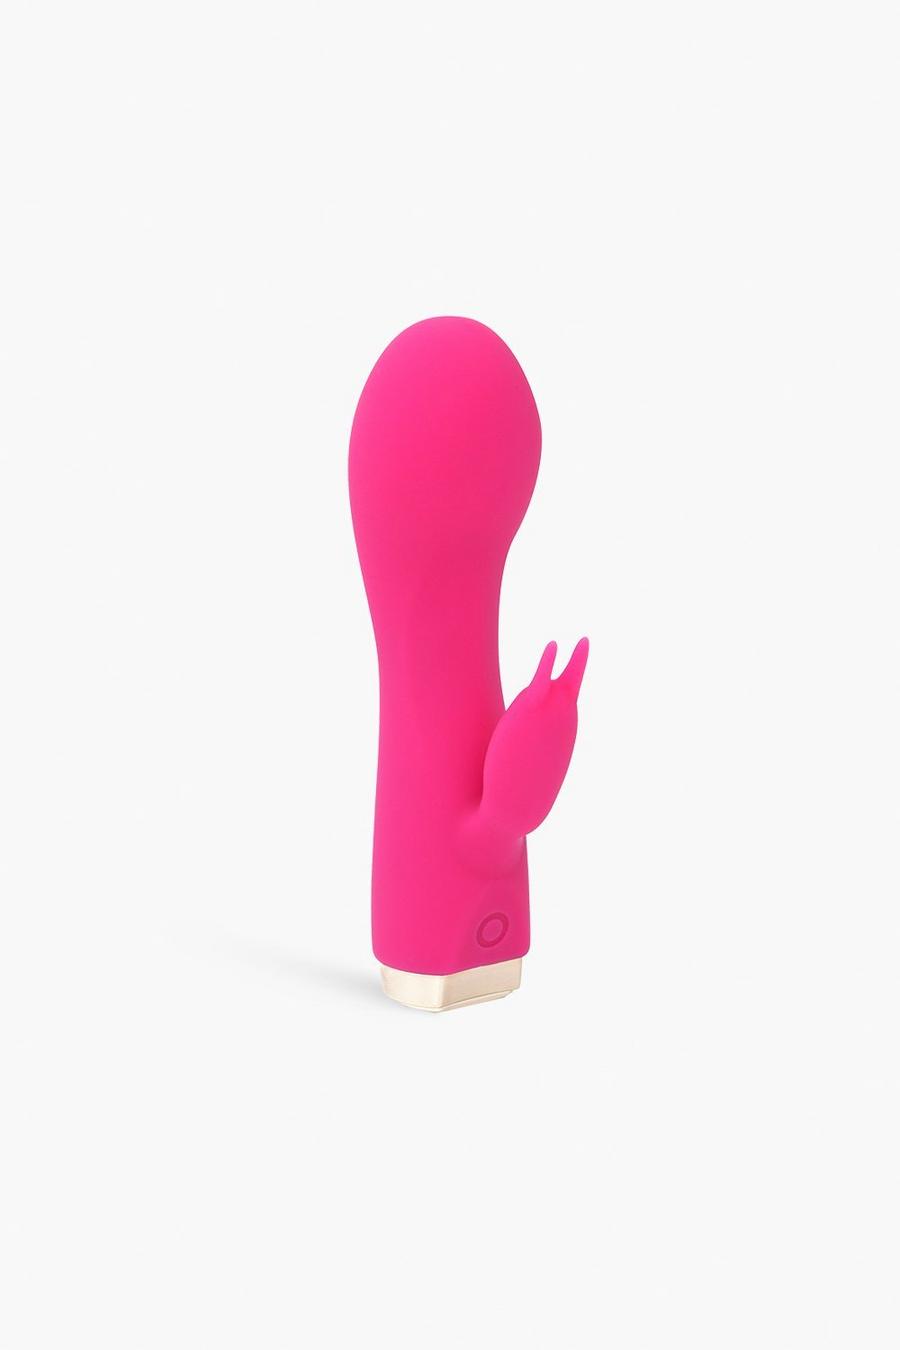 Skins - Mini vibromasseur - The Bijou Bunny, Pink rose